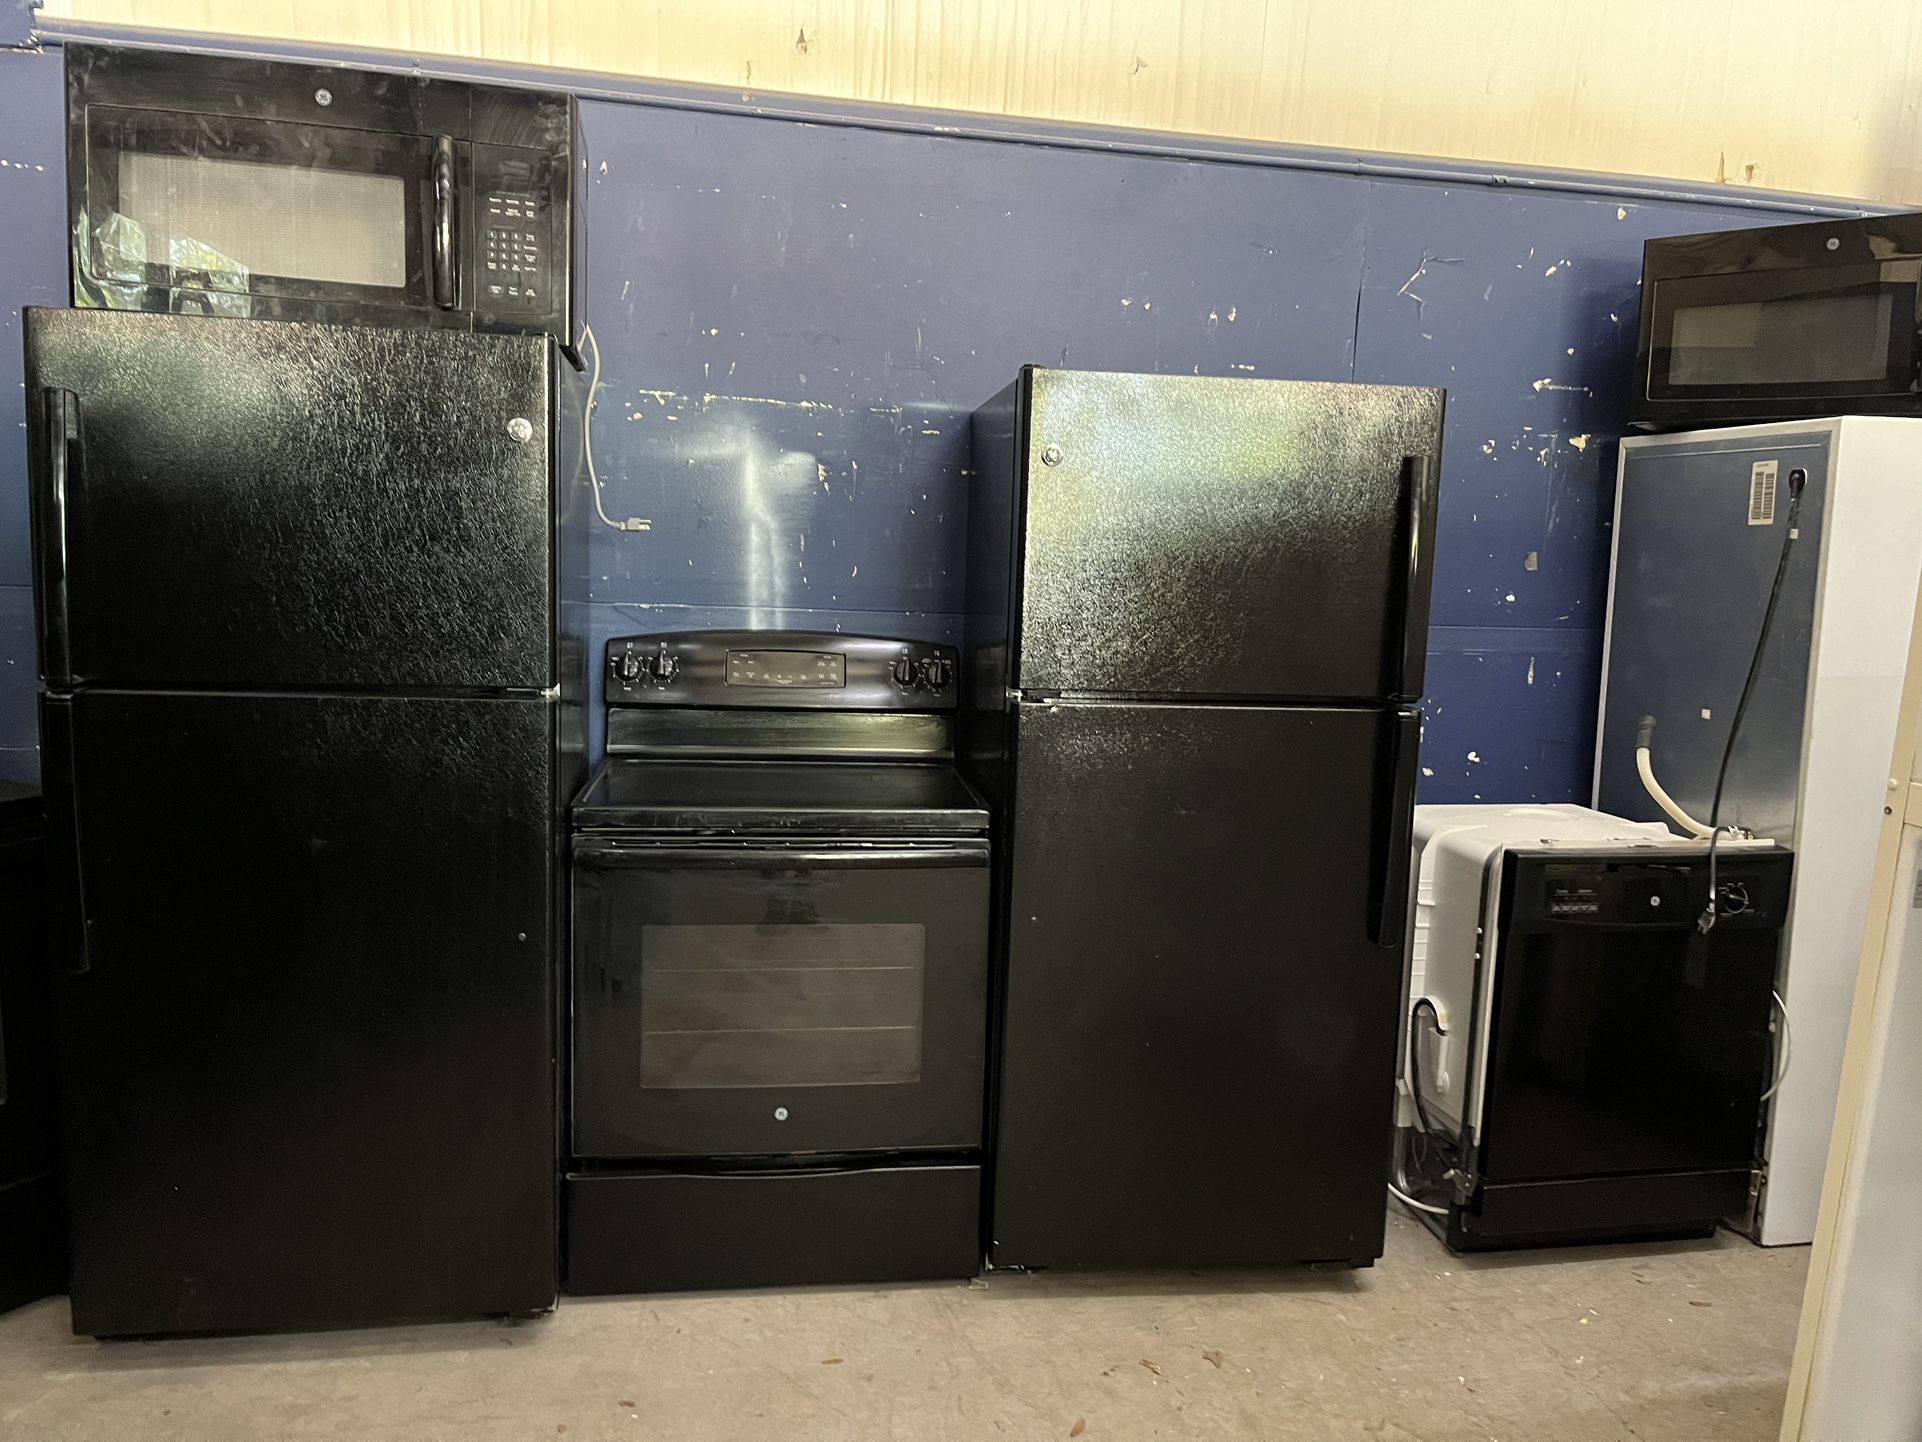 Black Kitchen Appliance Set 